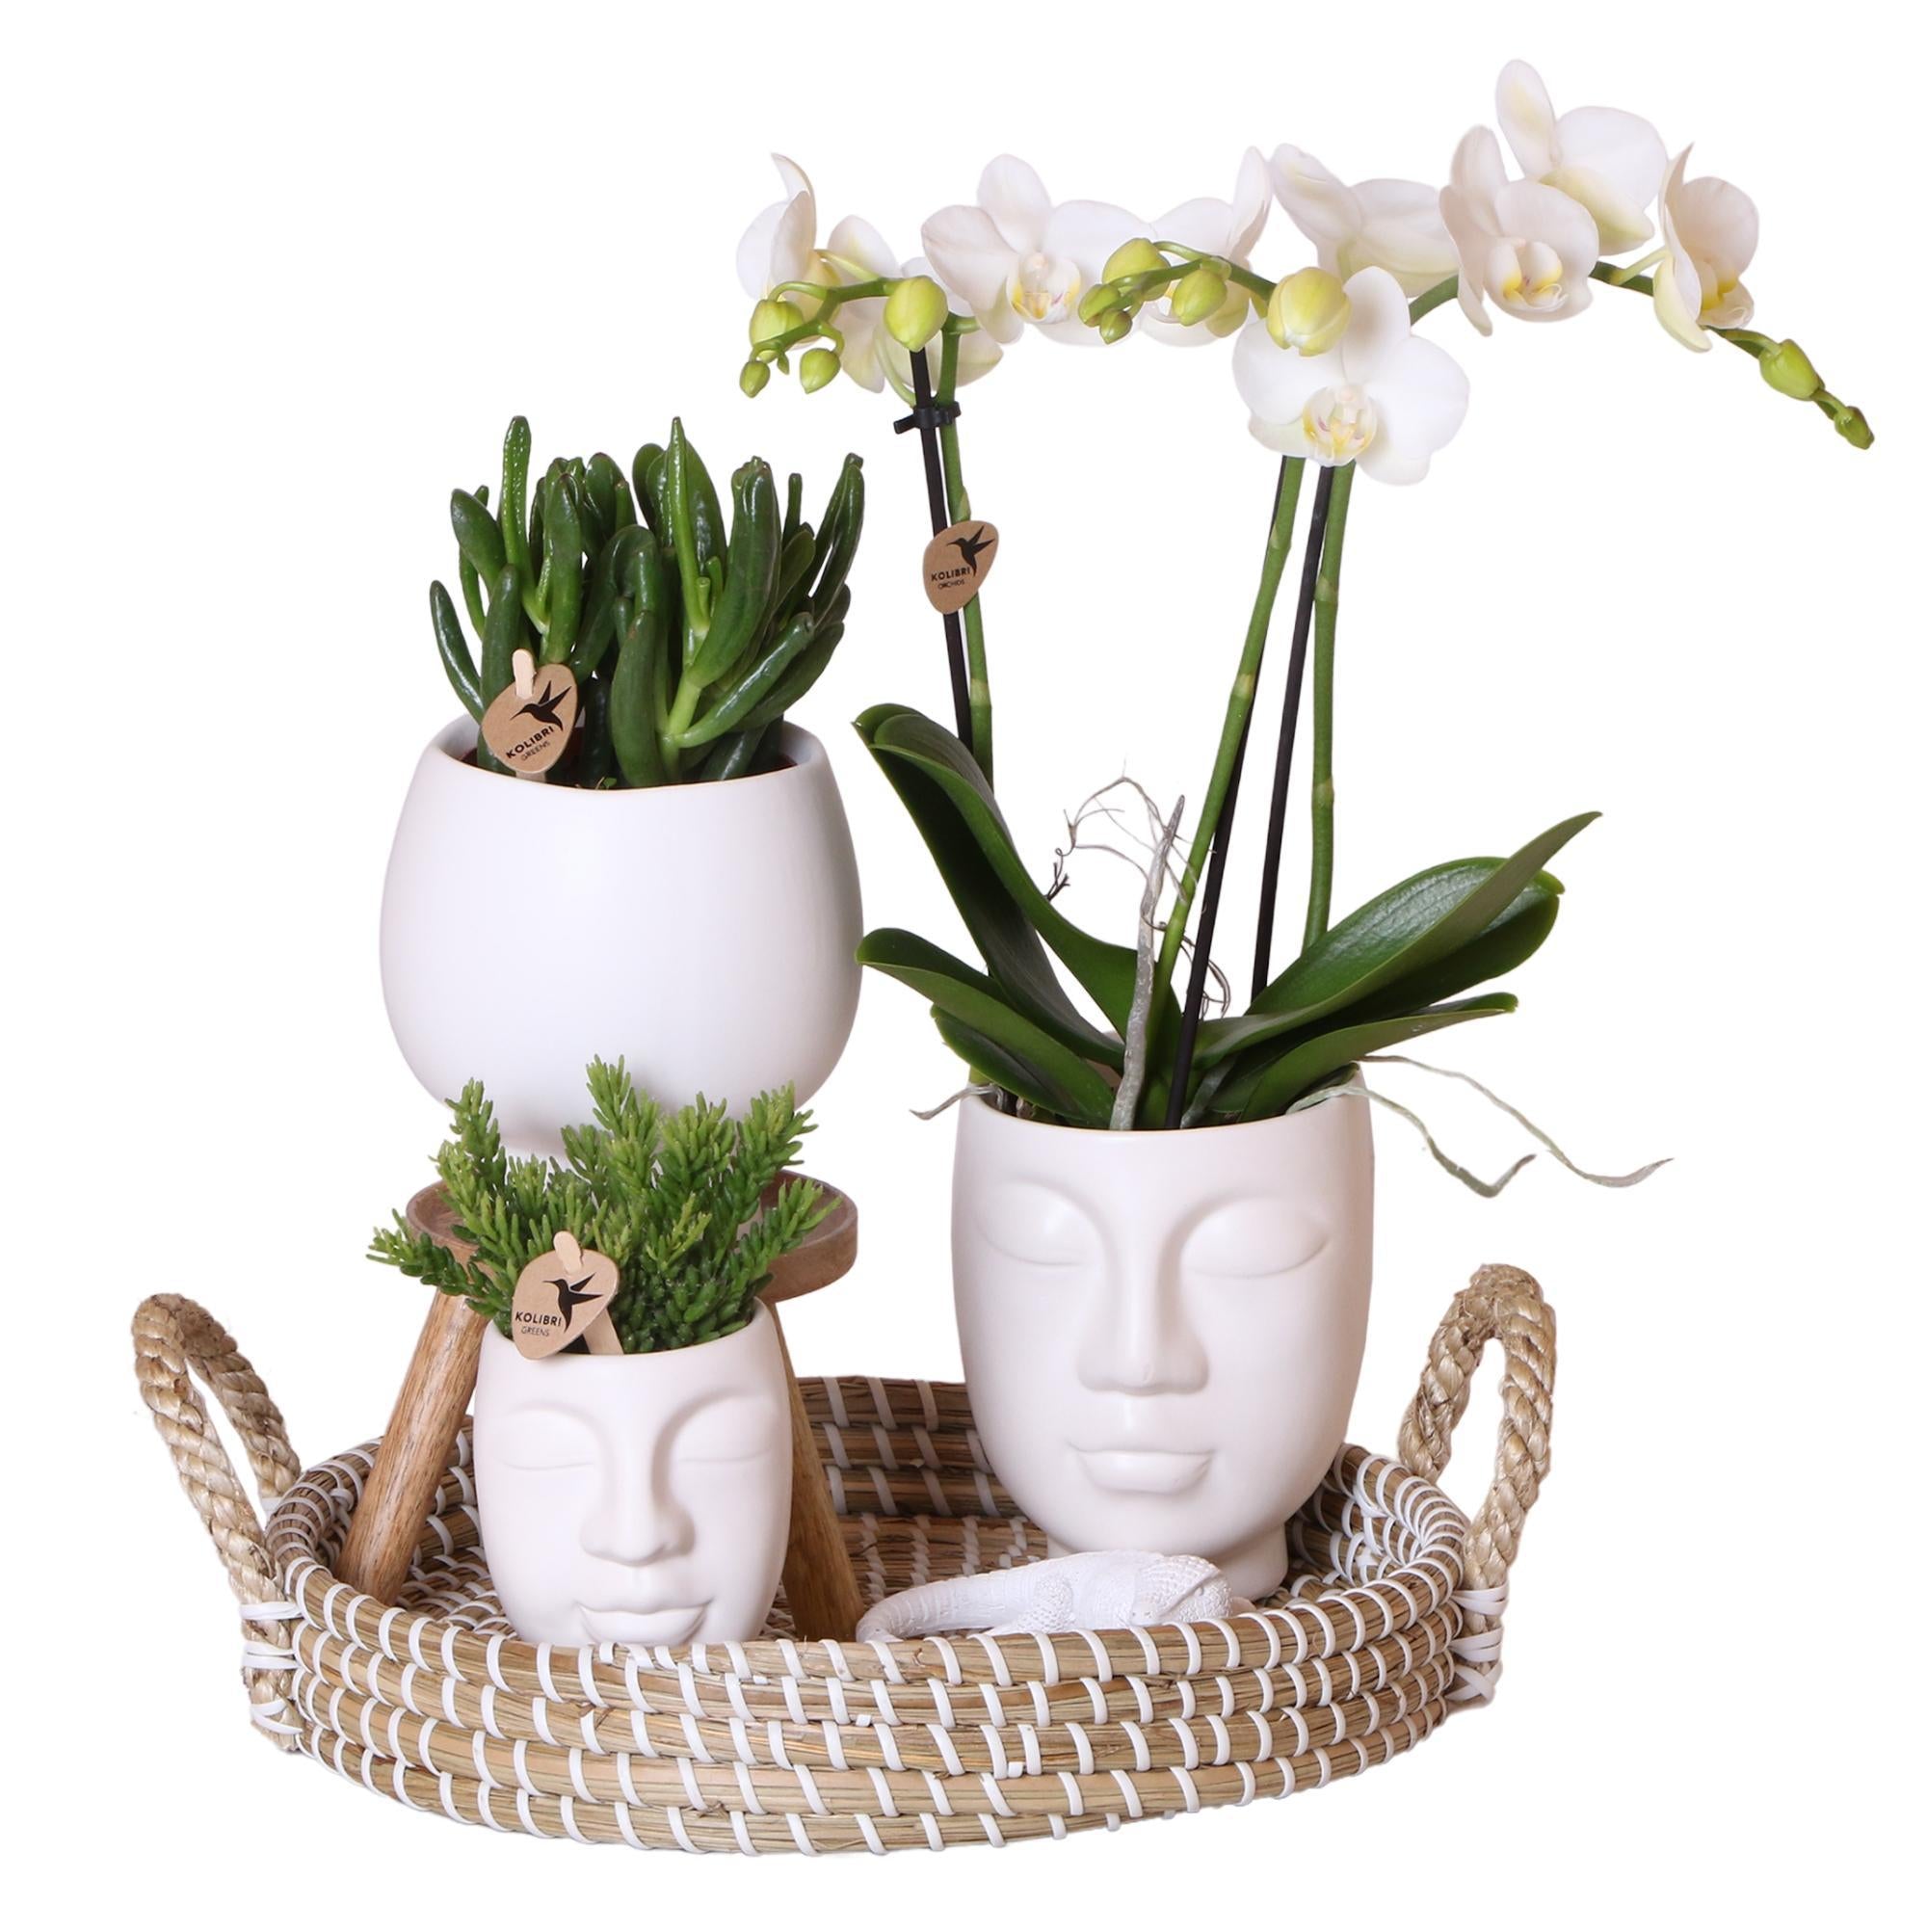 Everspring Complete plantenset face-2-face wit - groene planten met witte phalaenopsis orchidee in scandic wit sierpot en face-2-face witte sierpotten incl. Accessoires - vers van de kweker, luchtzuiverend